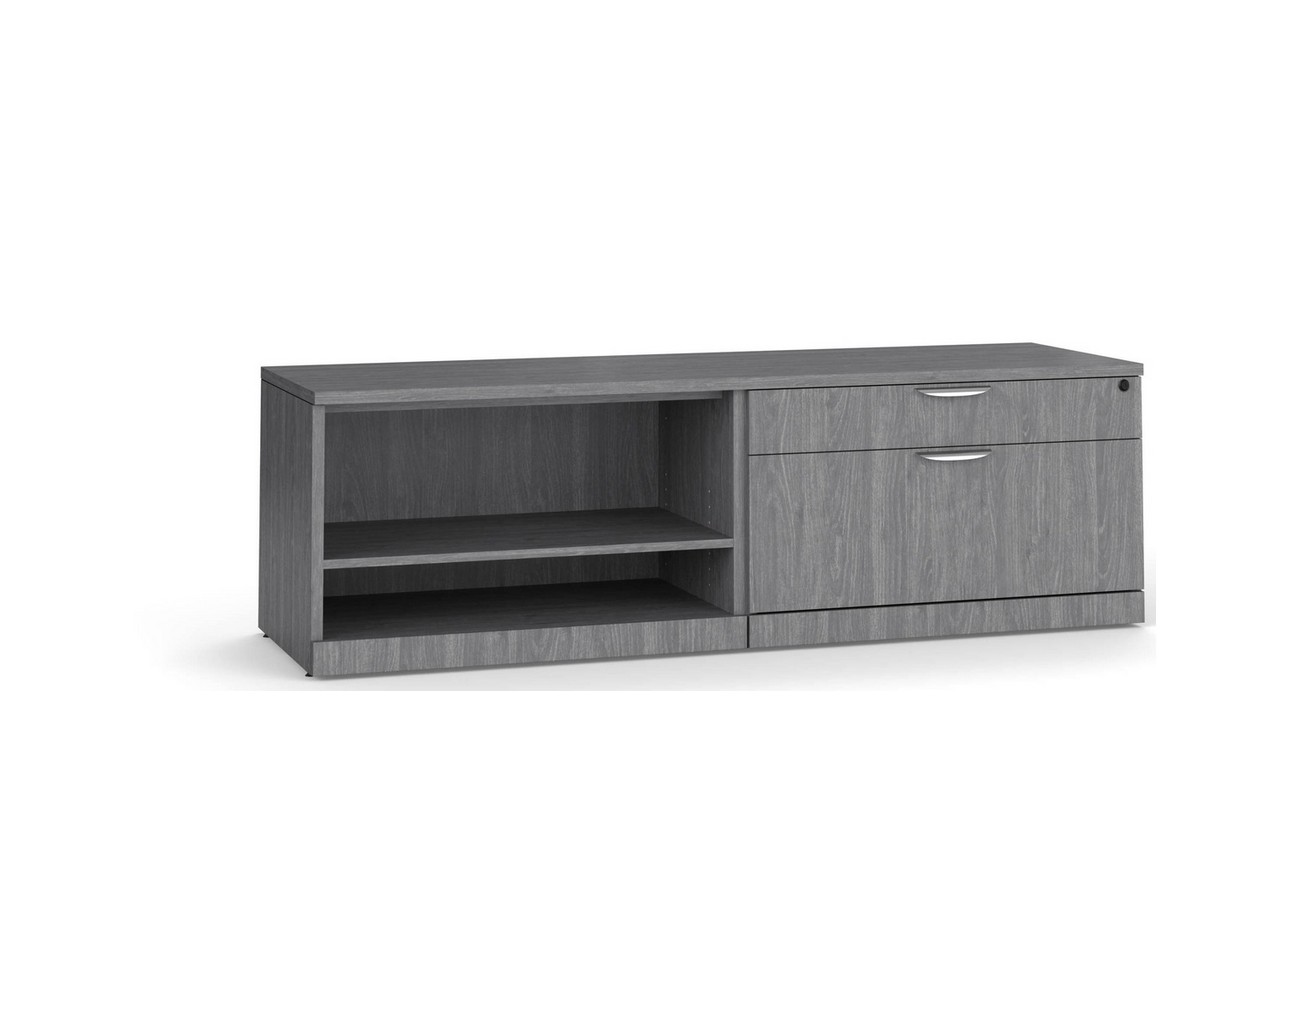 Elements Storage Cabinet and Bookshelf Credenza – NPG Base and Top